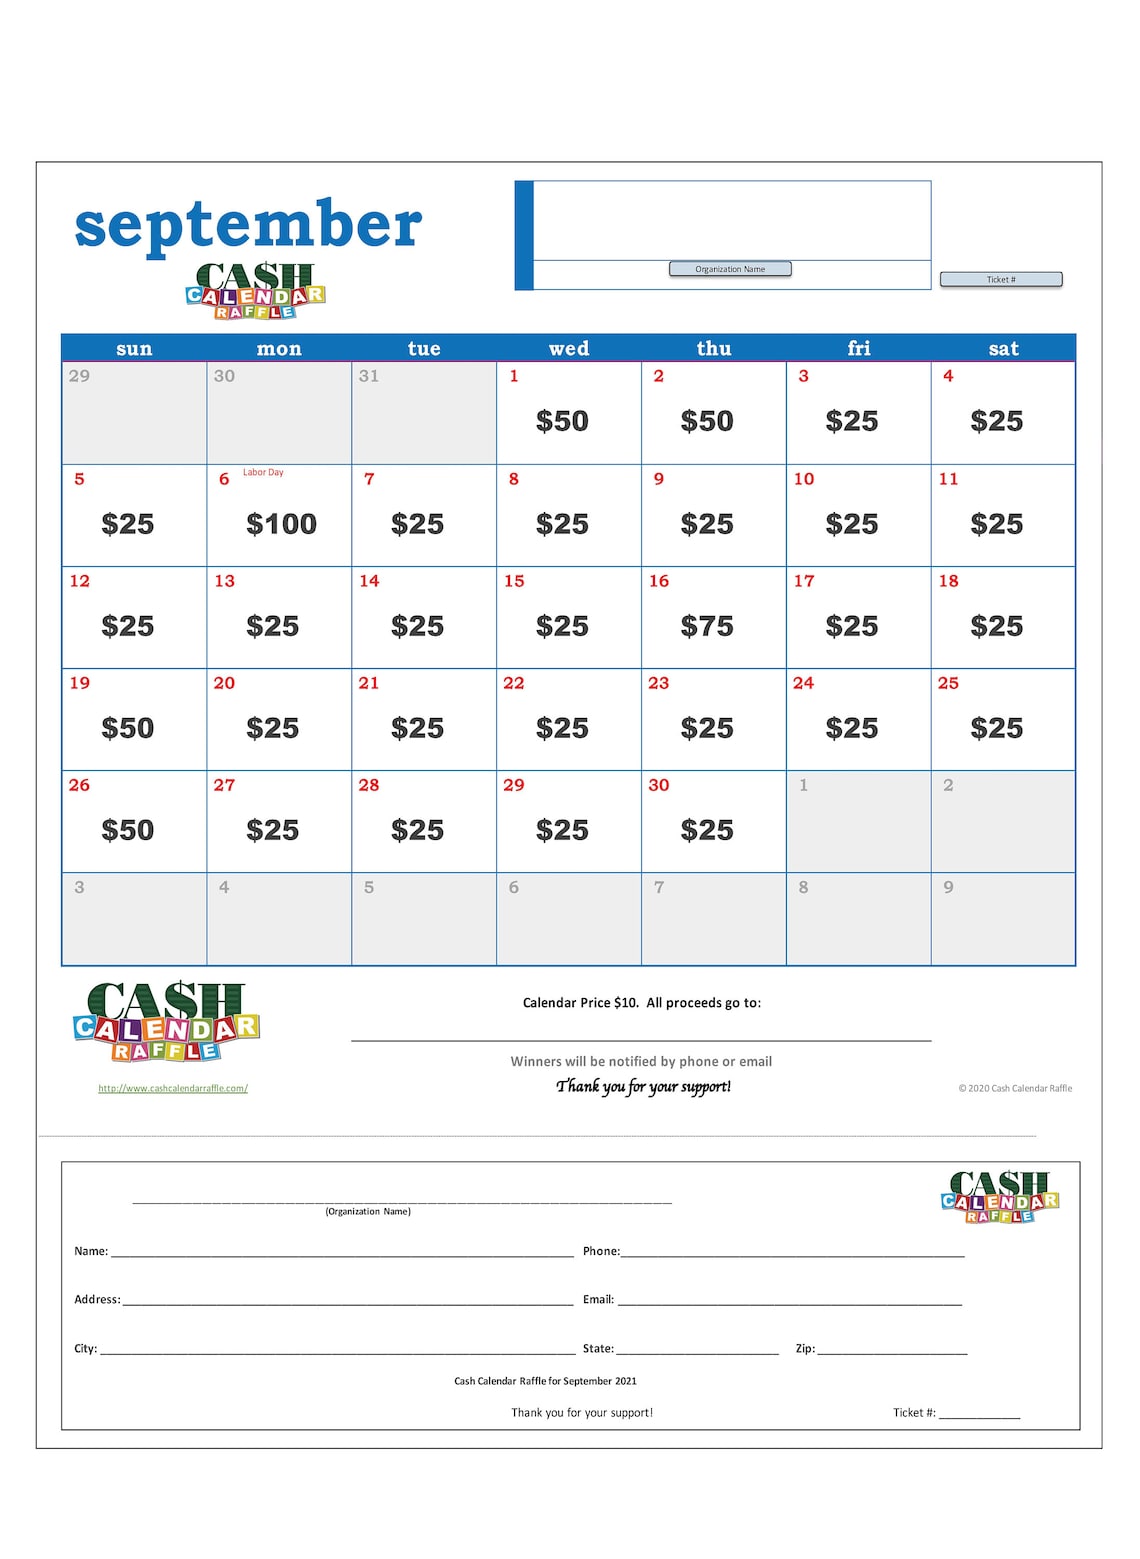 cash-calendar-fundraiser-template-customize-and-print